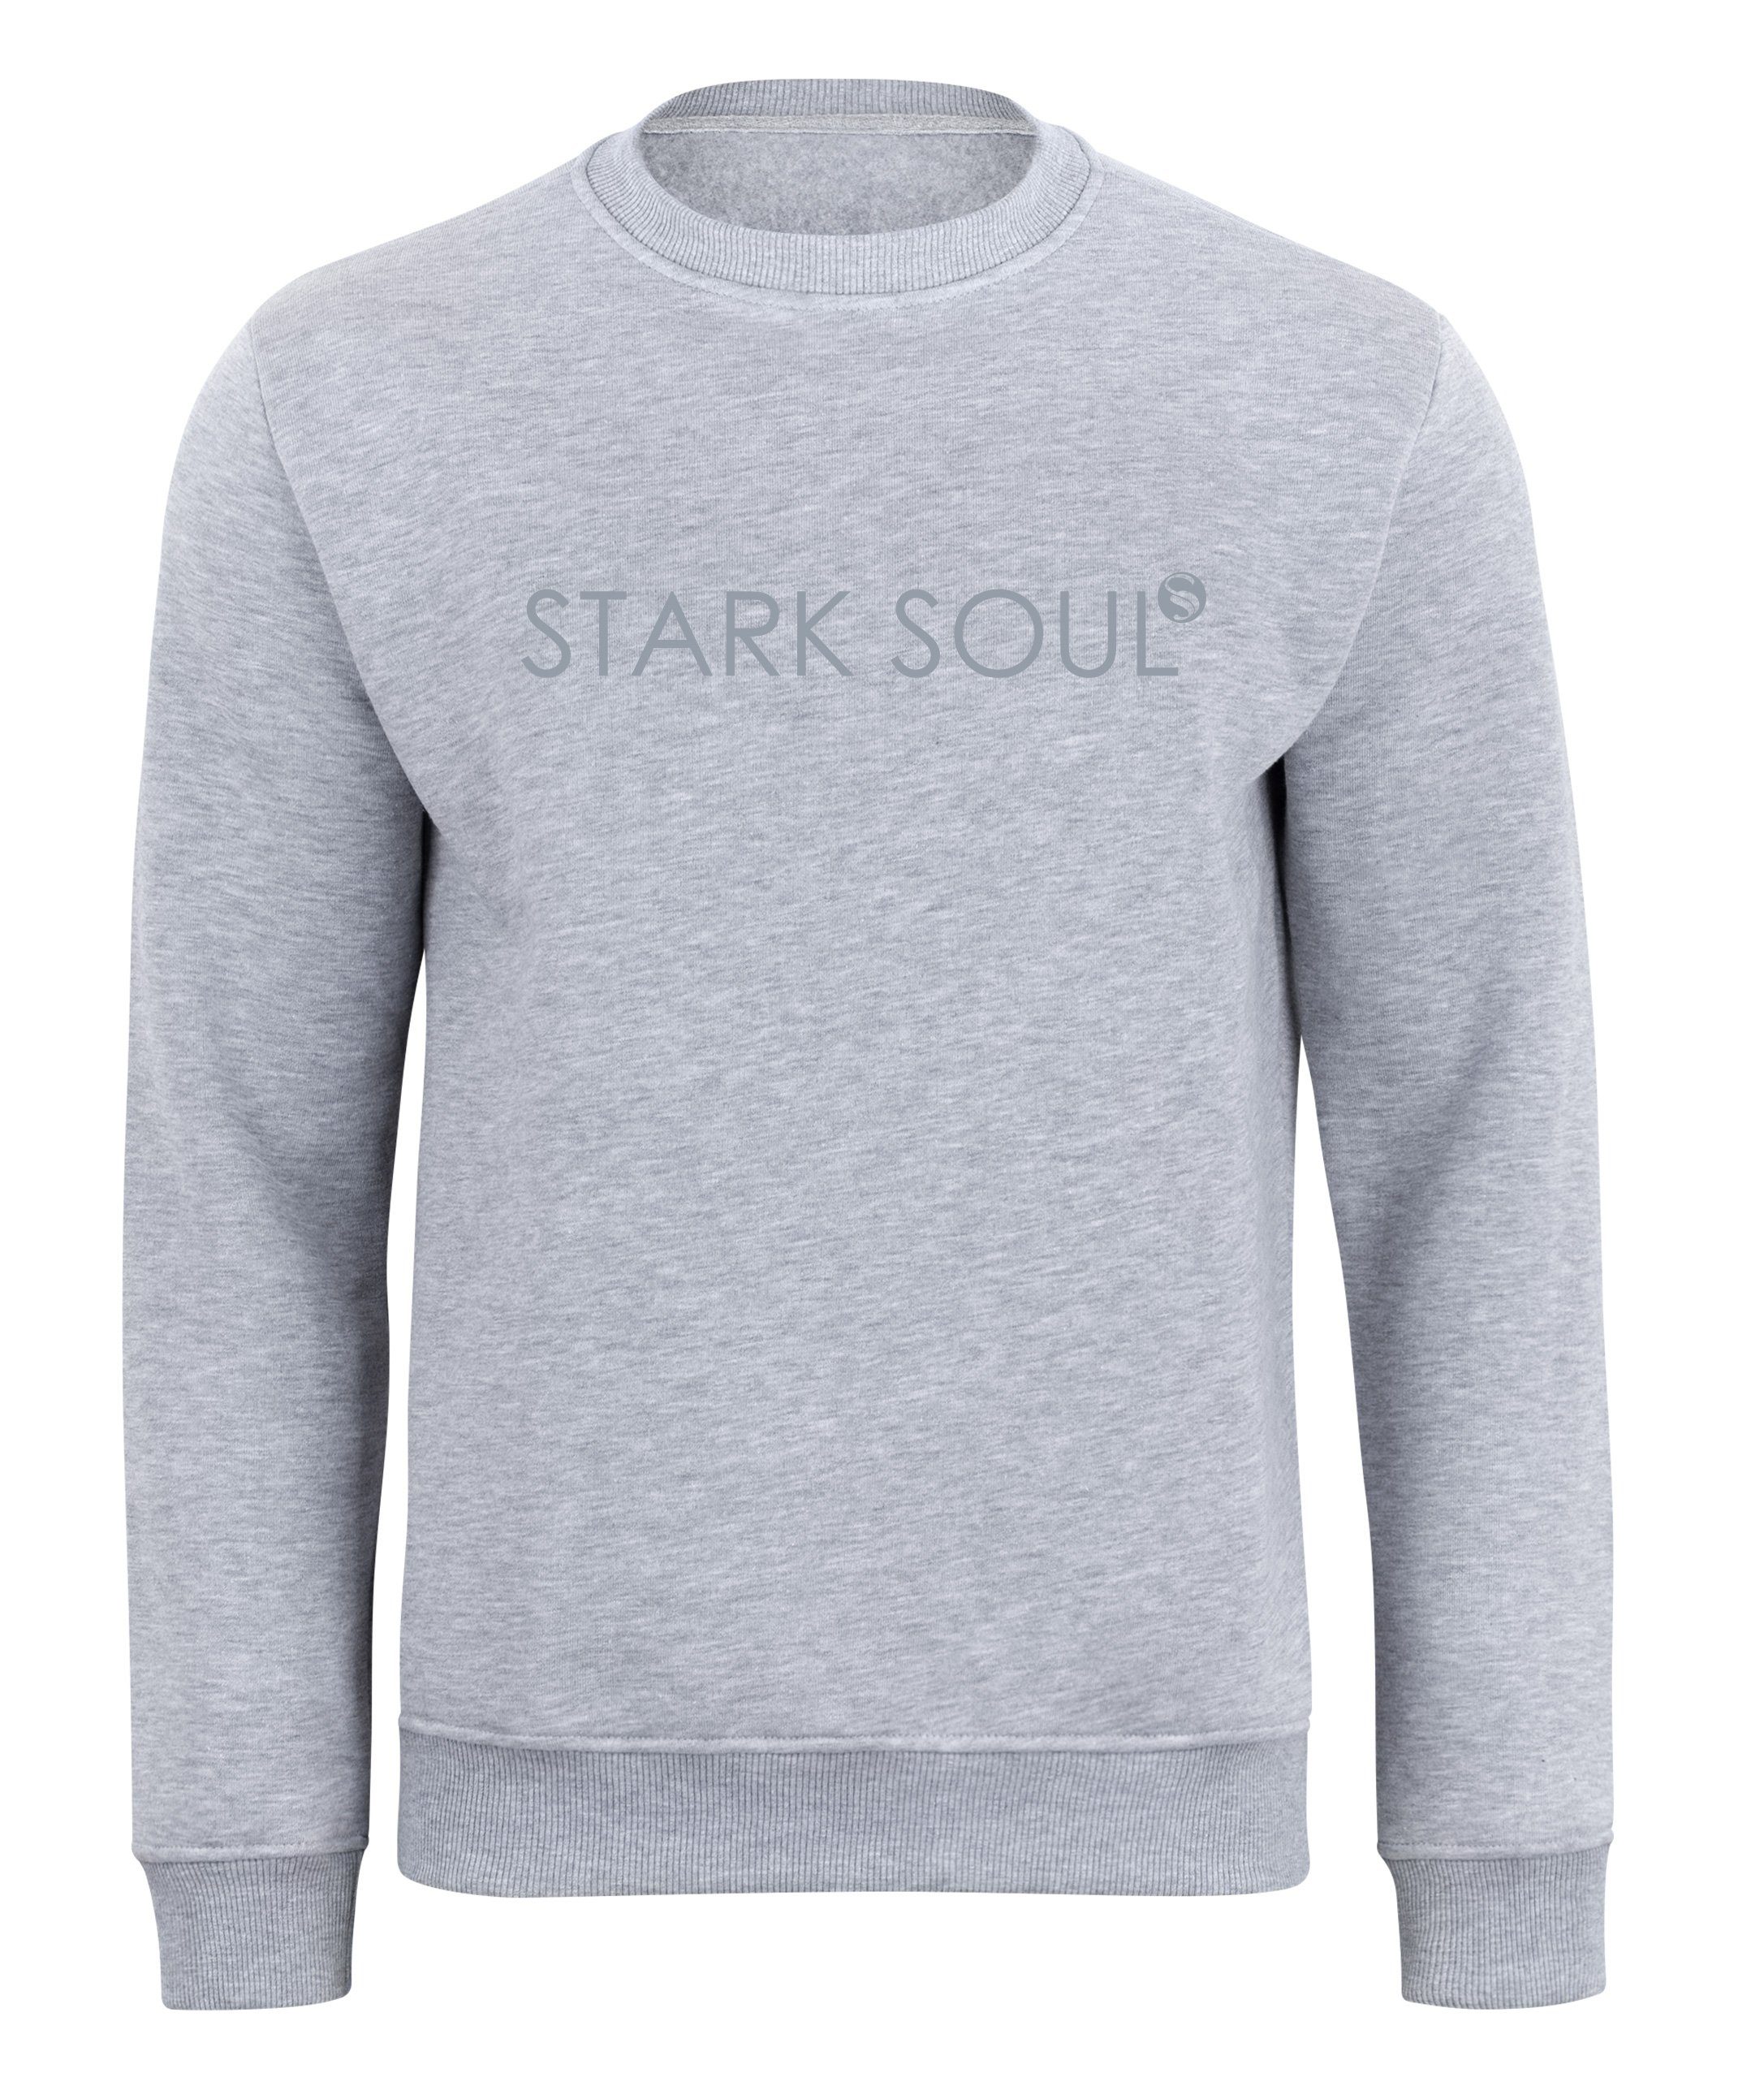 Stark Soul® Sweatshirt Innen Logoprint French-Terry-Rundhals-Sweatshirt, Grau-Melange angeraut mit